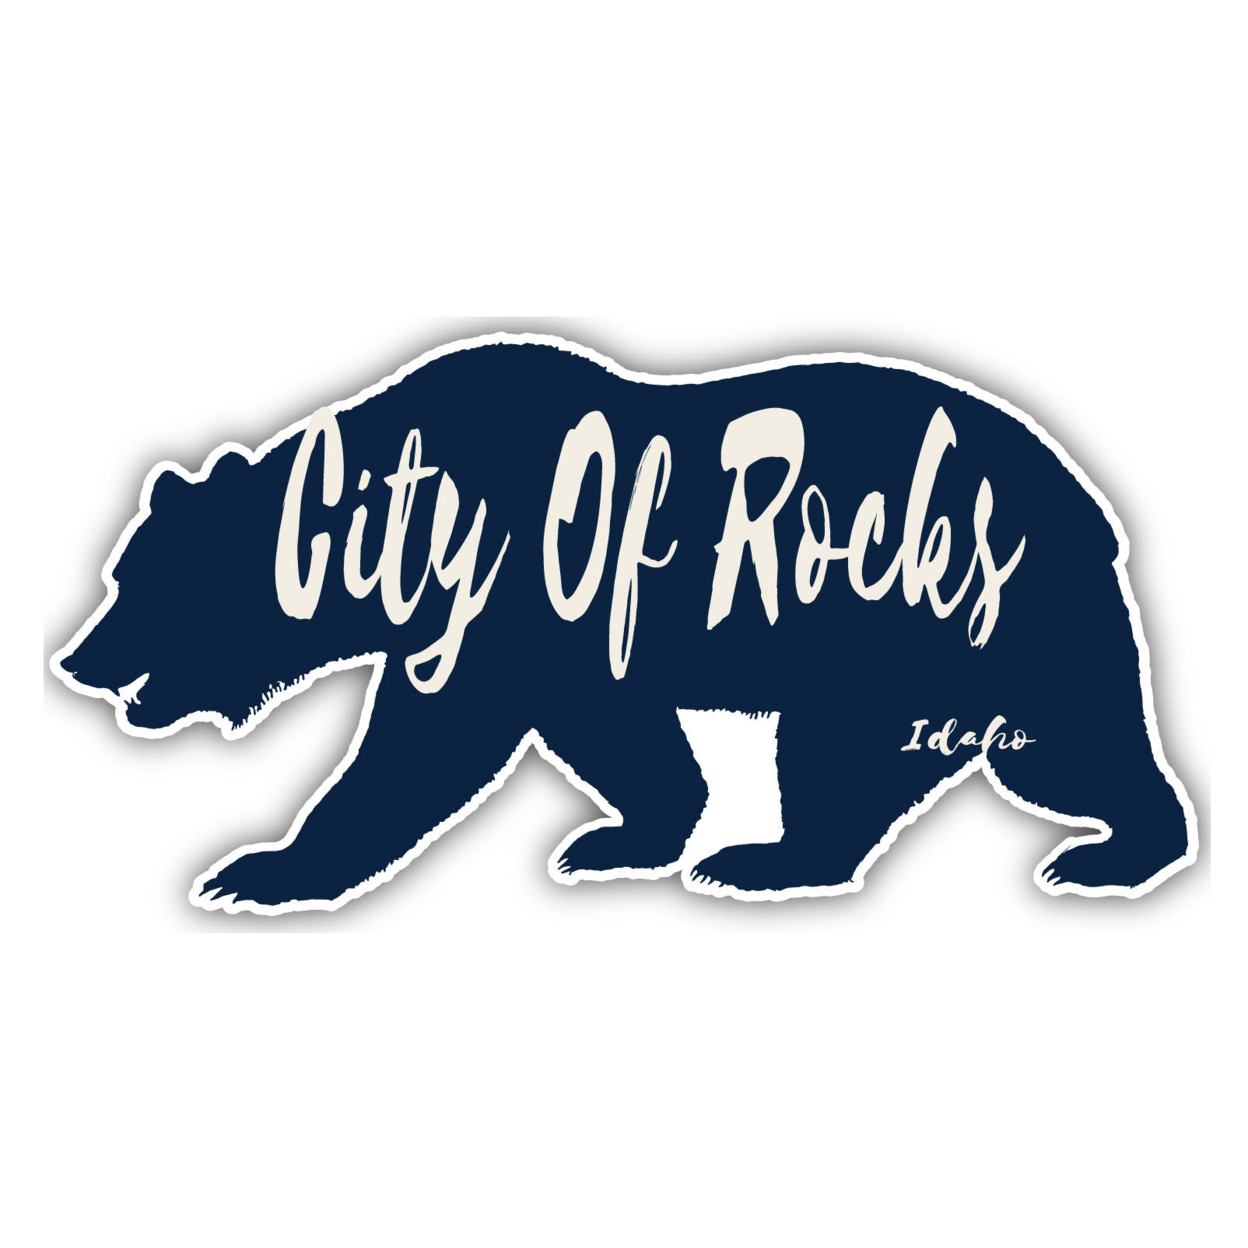 City Of Rocks Idaho Souvenir Decorative Stickers (Choose Theme And Size) - Single Unit, 10-Inch, Camp Life